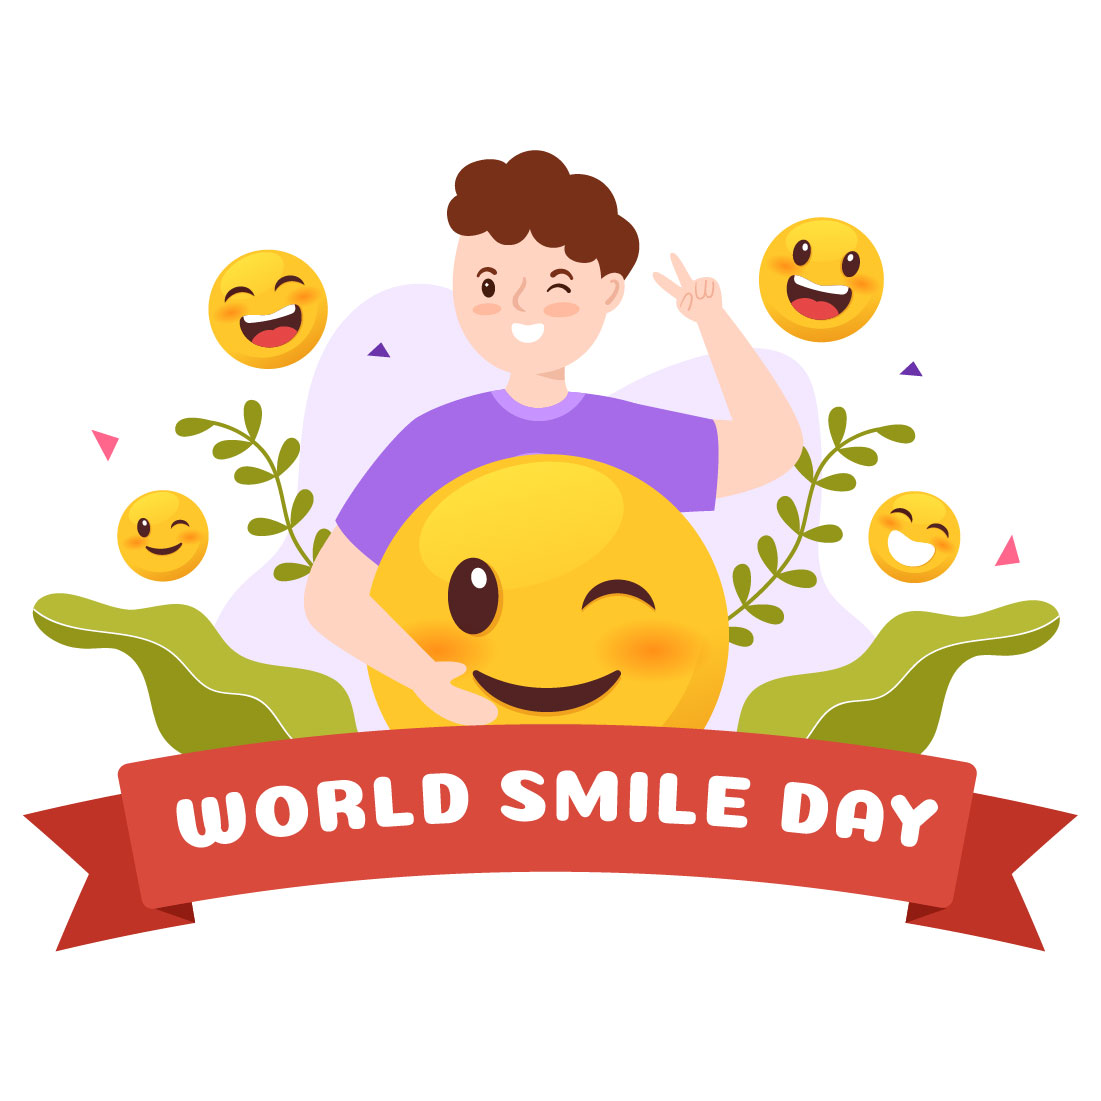 17 World Smile Day Illustration cover image.